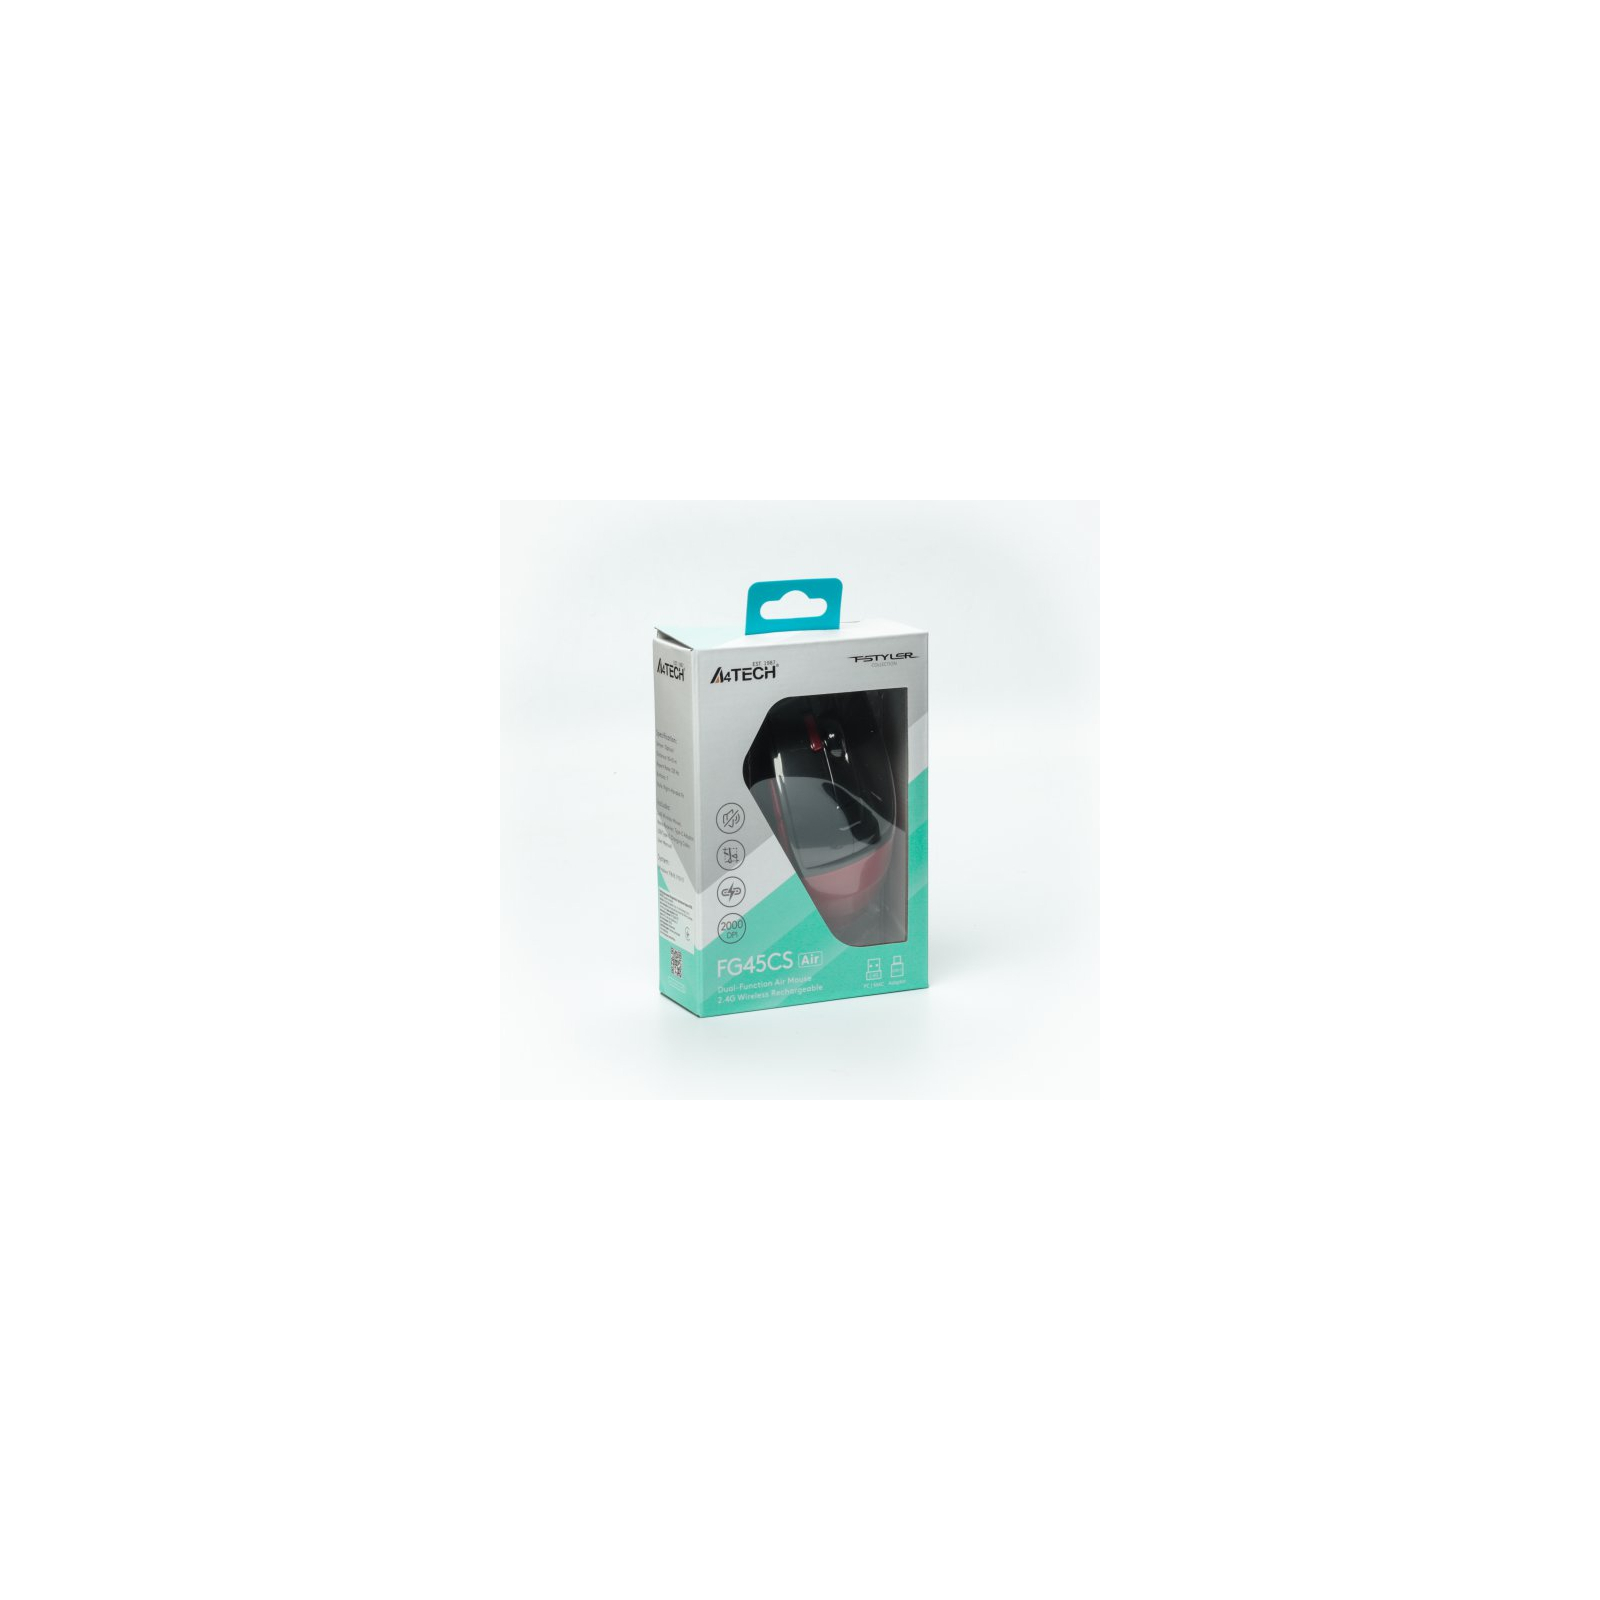 Мышка A4Tech FG45CS Air Wireless Cream Beige (4711421993005) изображение 9